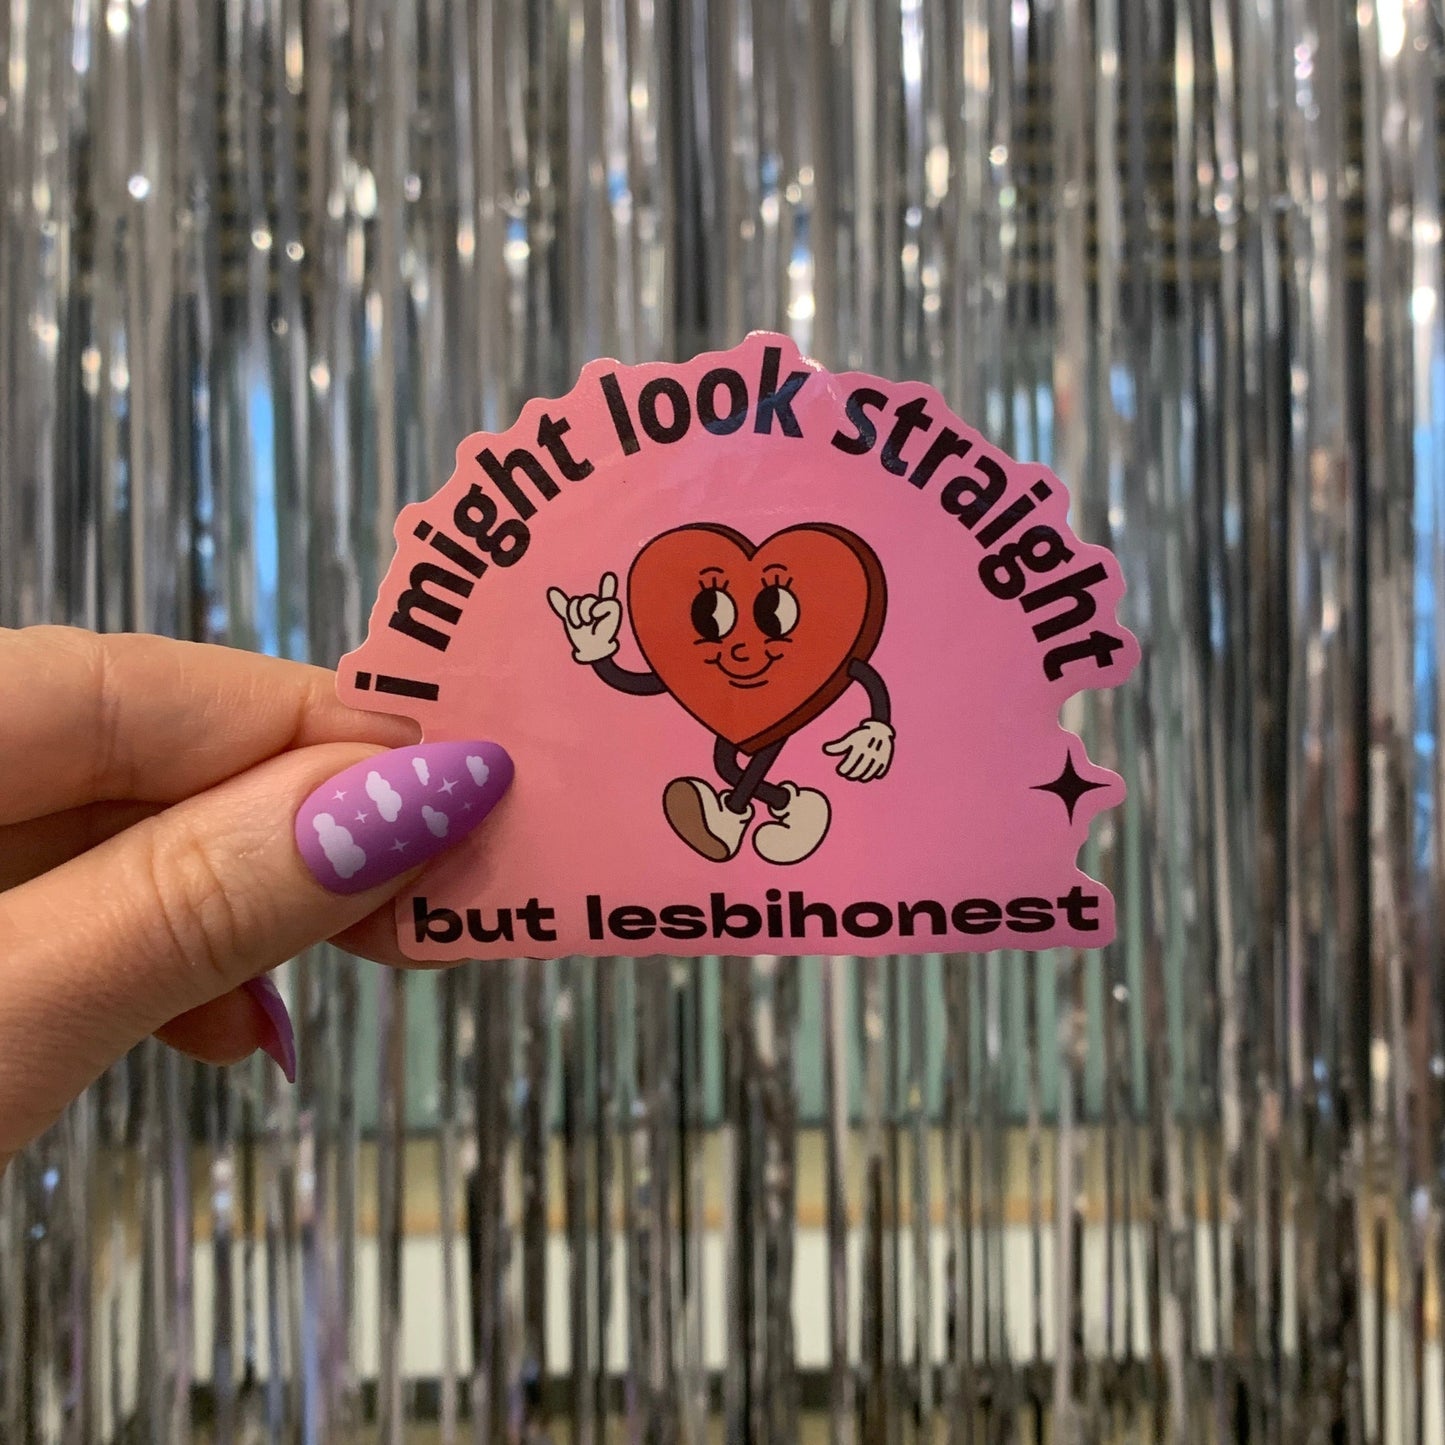 I Might Look Straight But Lesbihonest Heart Sticker | Vinyl Die Cut Decal | LGBT Pride